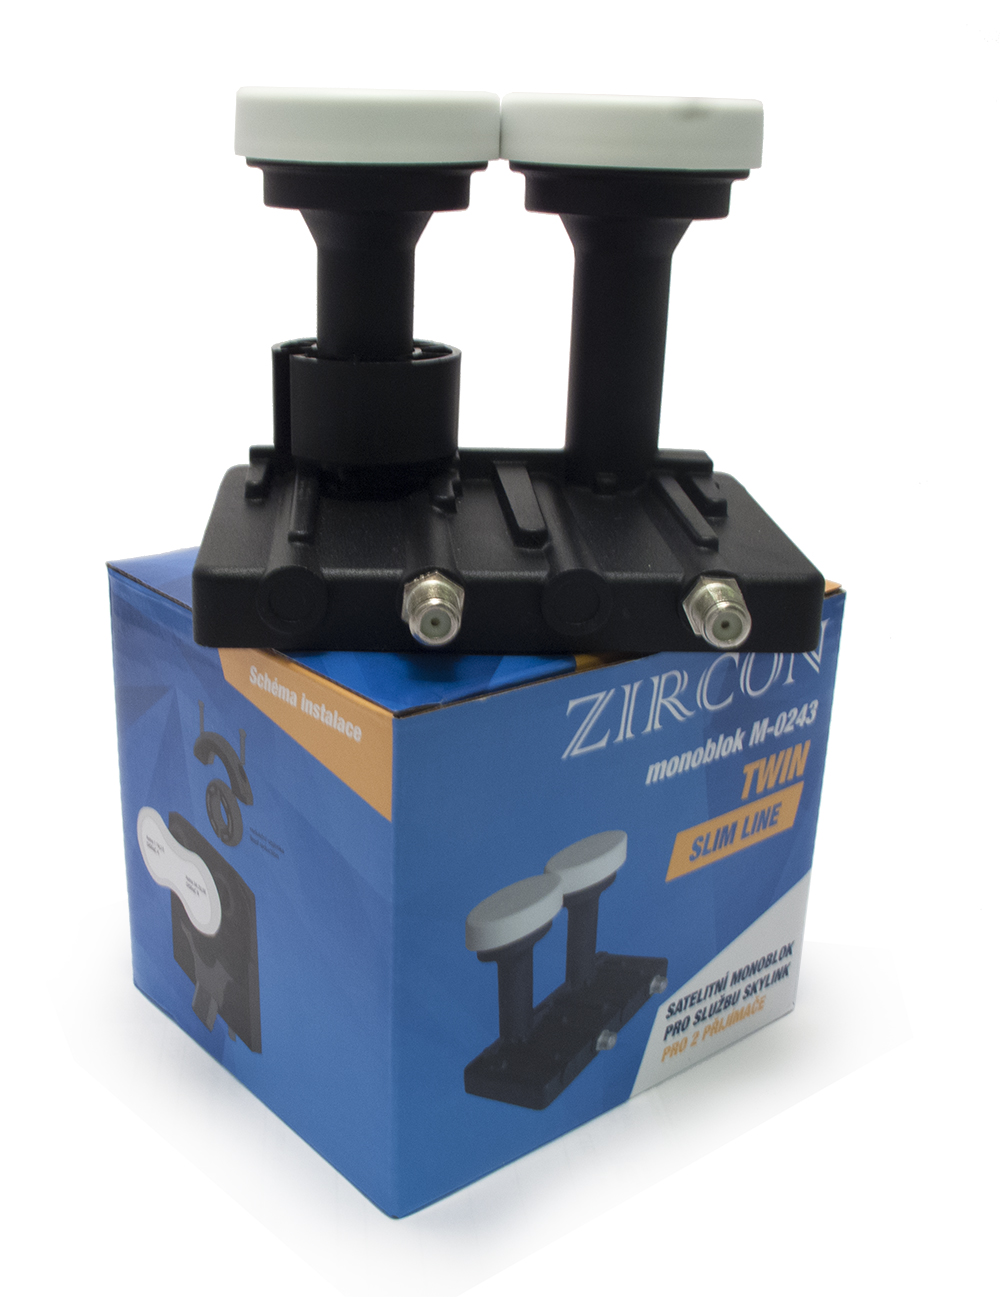 E-shop Zircon konvertor Monoblok Twin M-0243 Skylink Slim line LTE